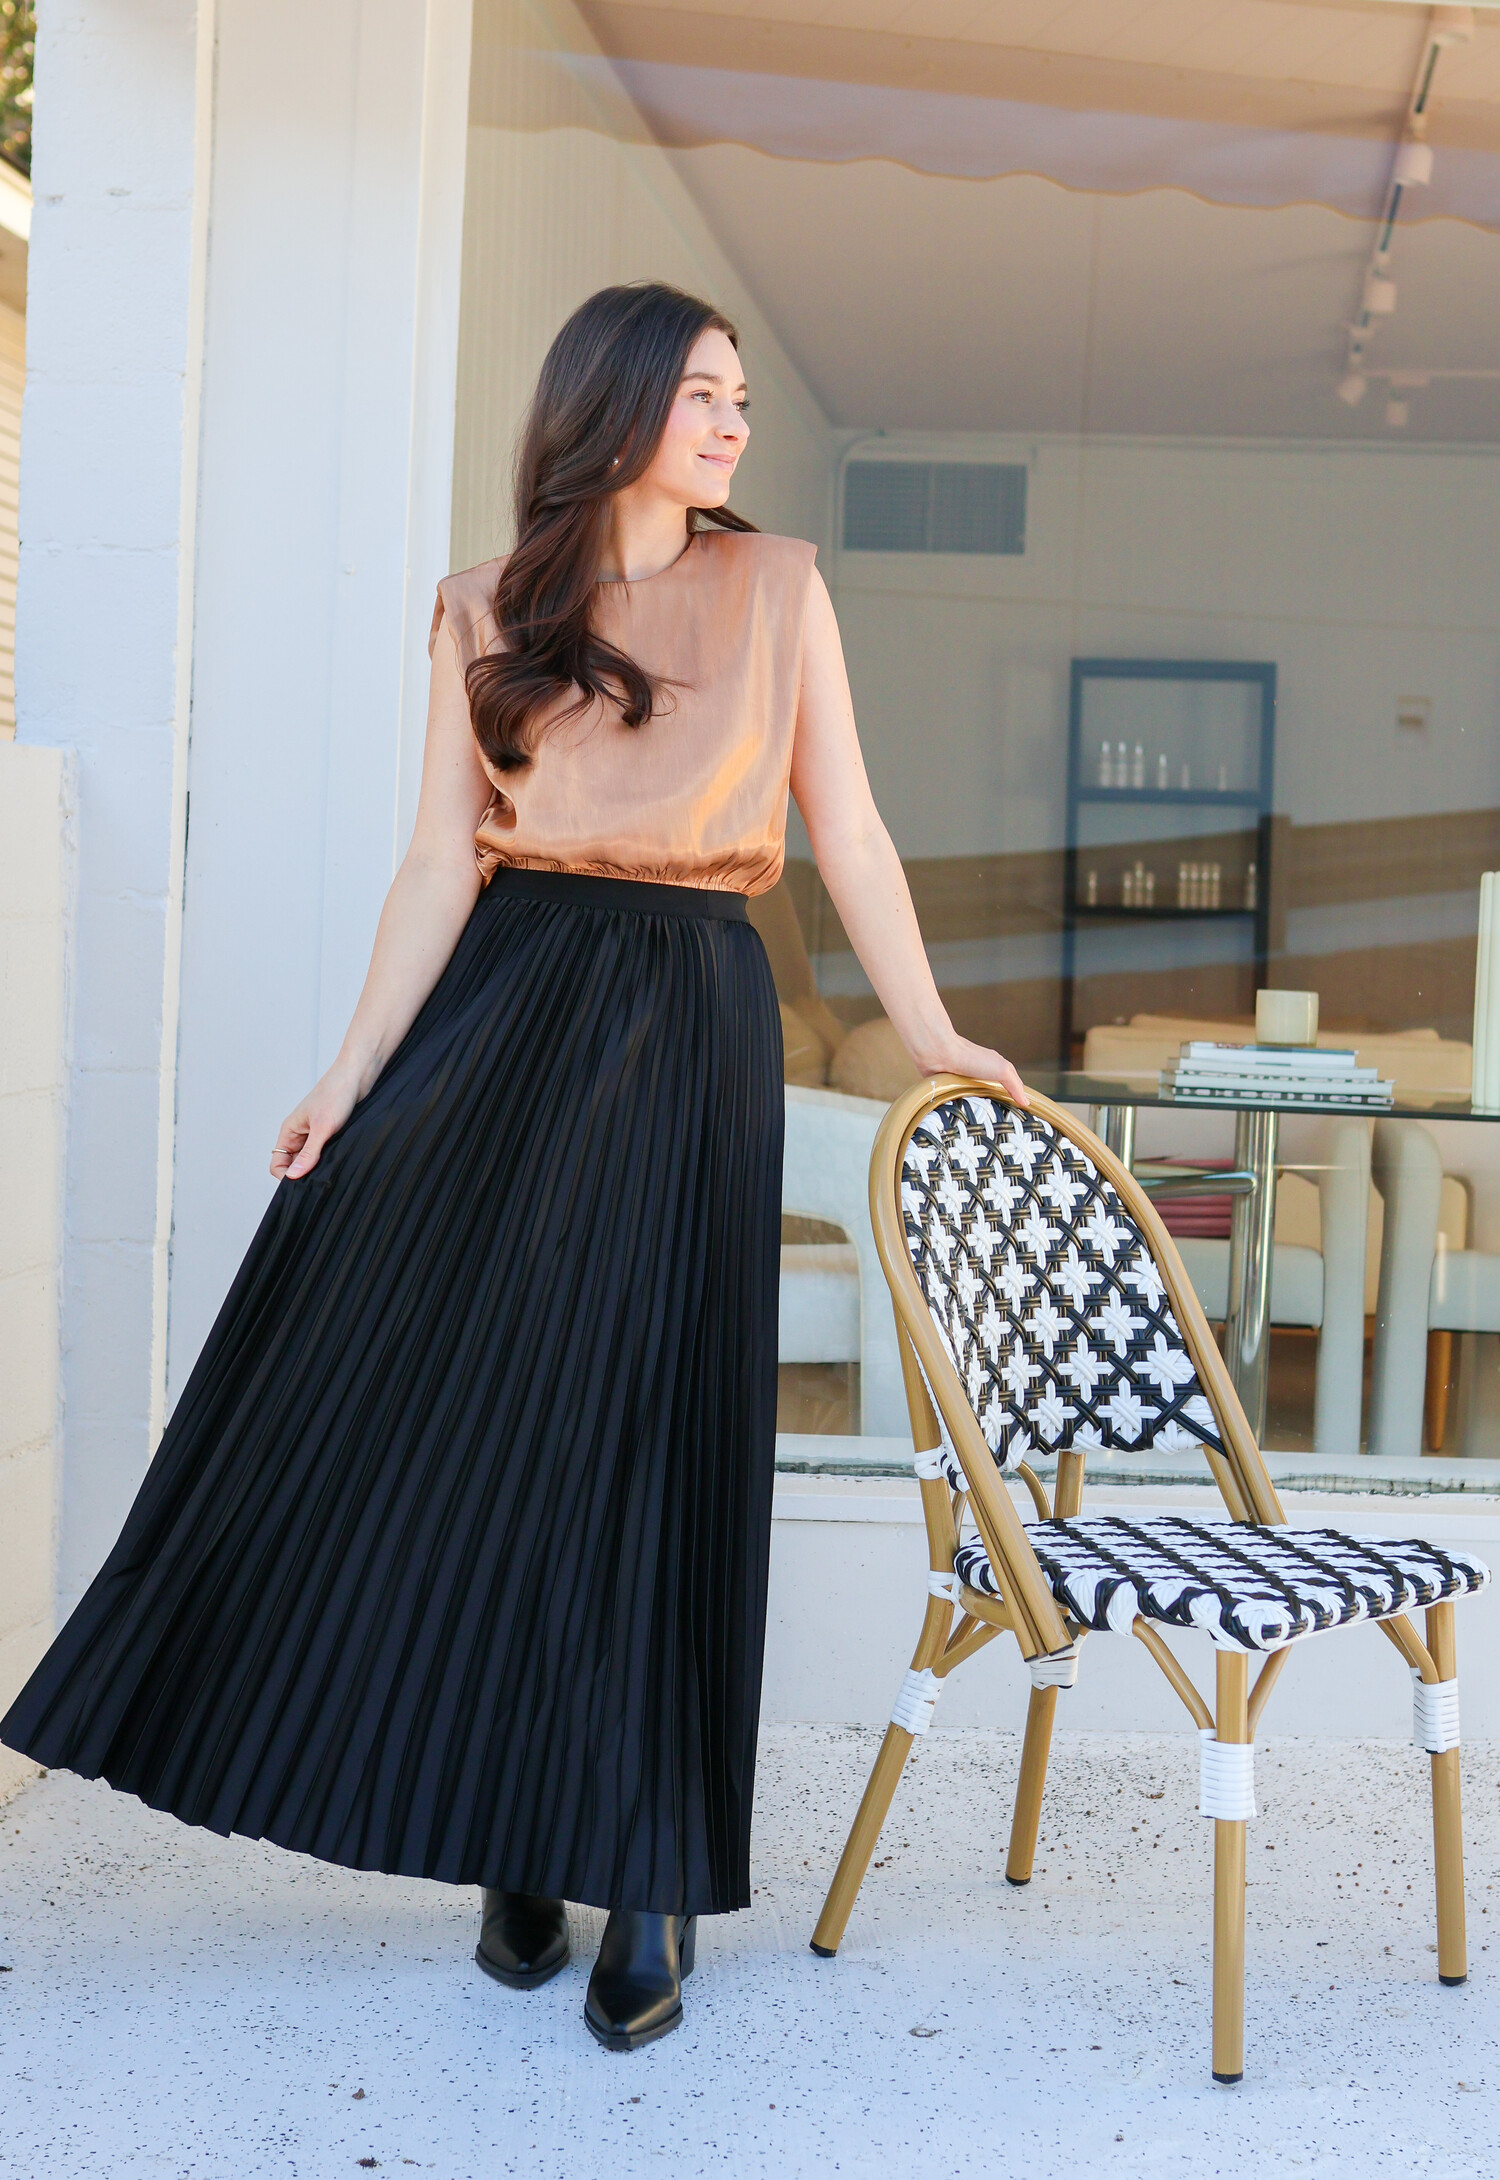 Buy Afibi Boho Floral Long Summer Beach Chiffon Wrap Cover Up Maxi Skirt  for Women (Medium, Pattern 107) at Amazon.in